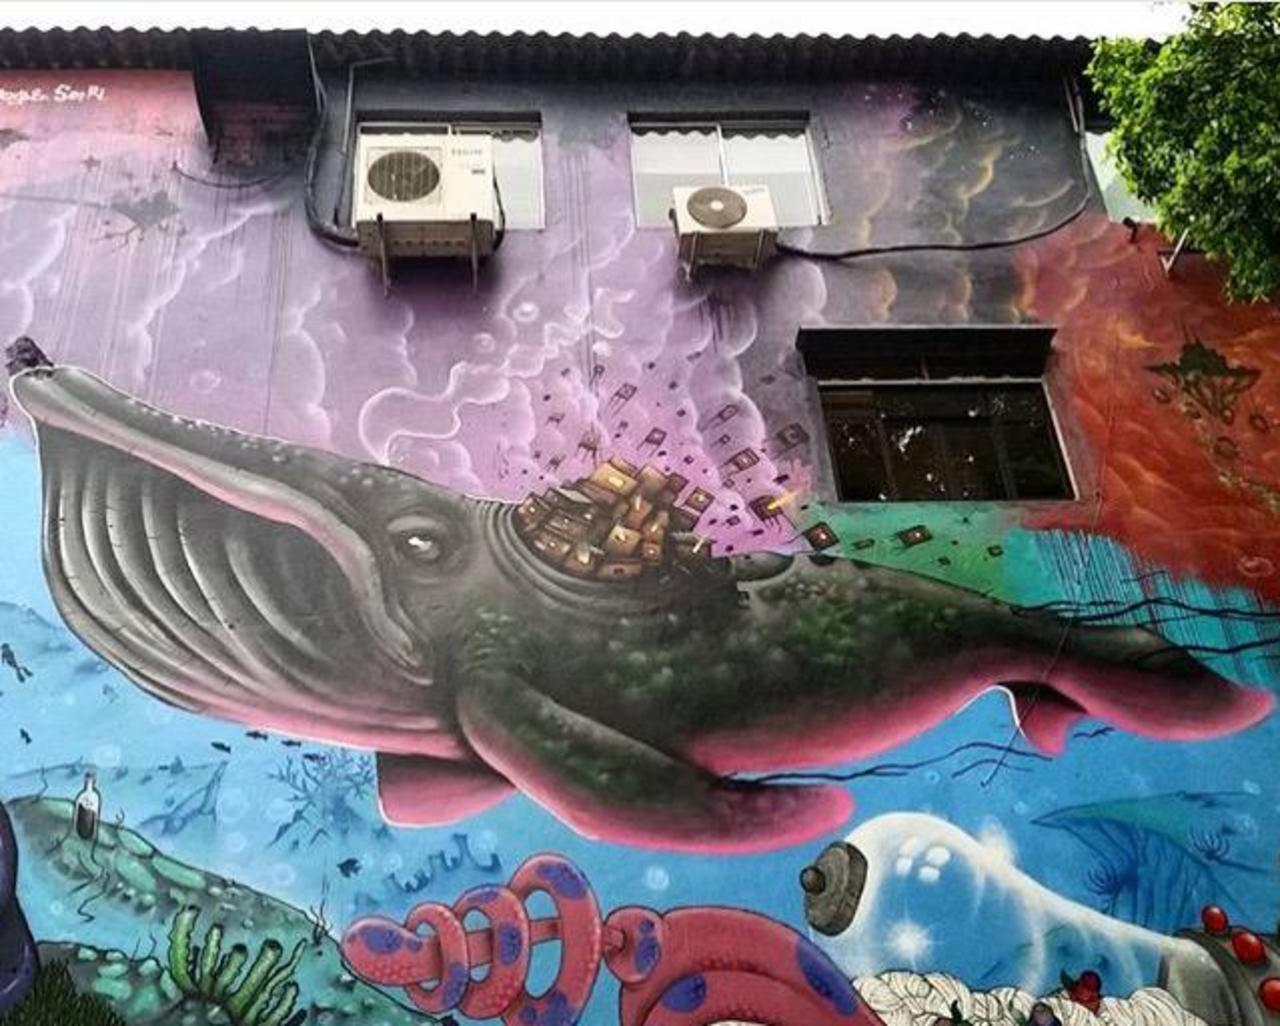 Street Art by joks_johnes Pinheiros, São Paulo 

#art #mural #graffiti #streetart http://t.co/UBfcjfhUpx